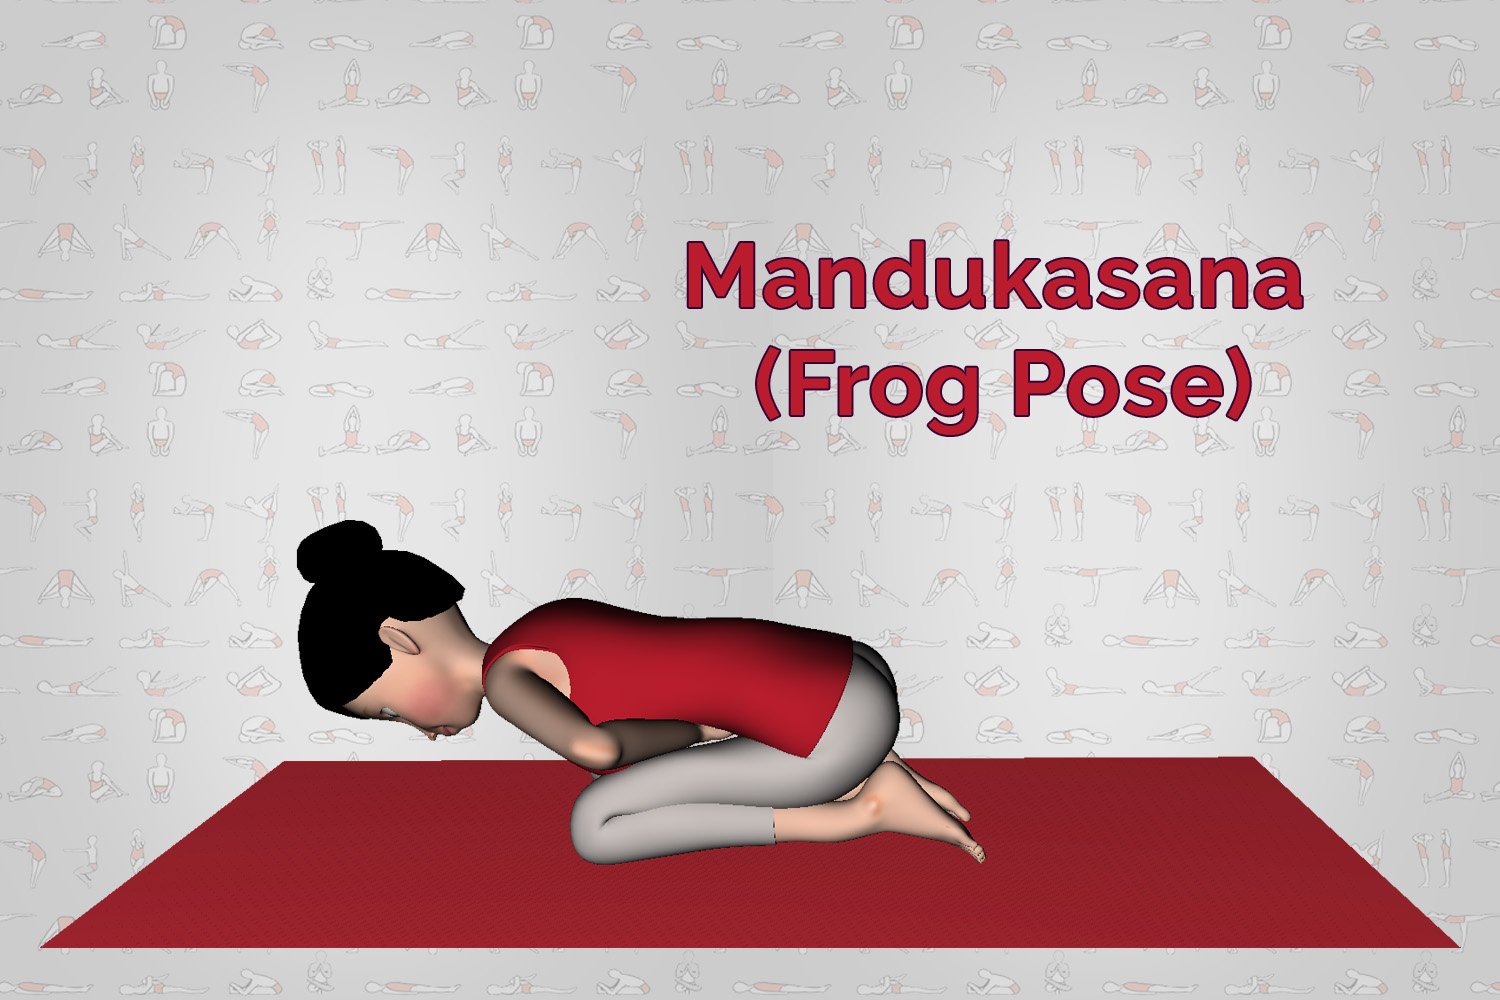 Bhekasana | Frog Pose : Steps, Benefits and Precautions